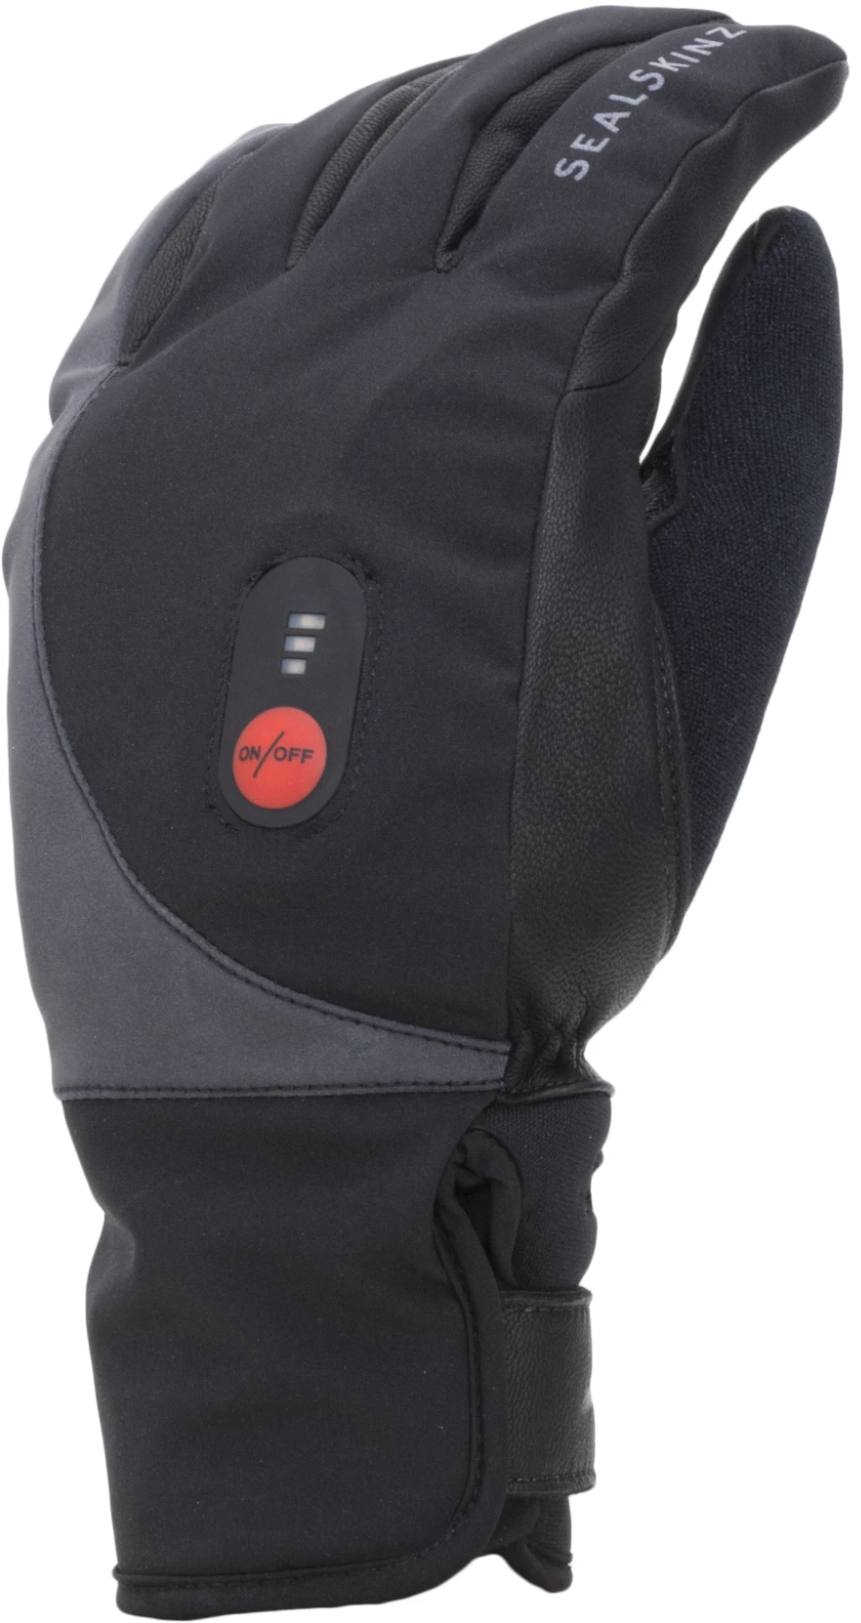 SealSkinz Heated WP Cycle Glove